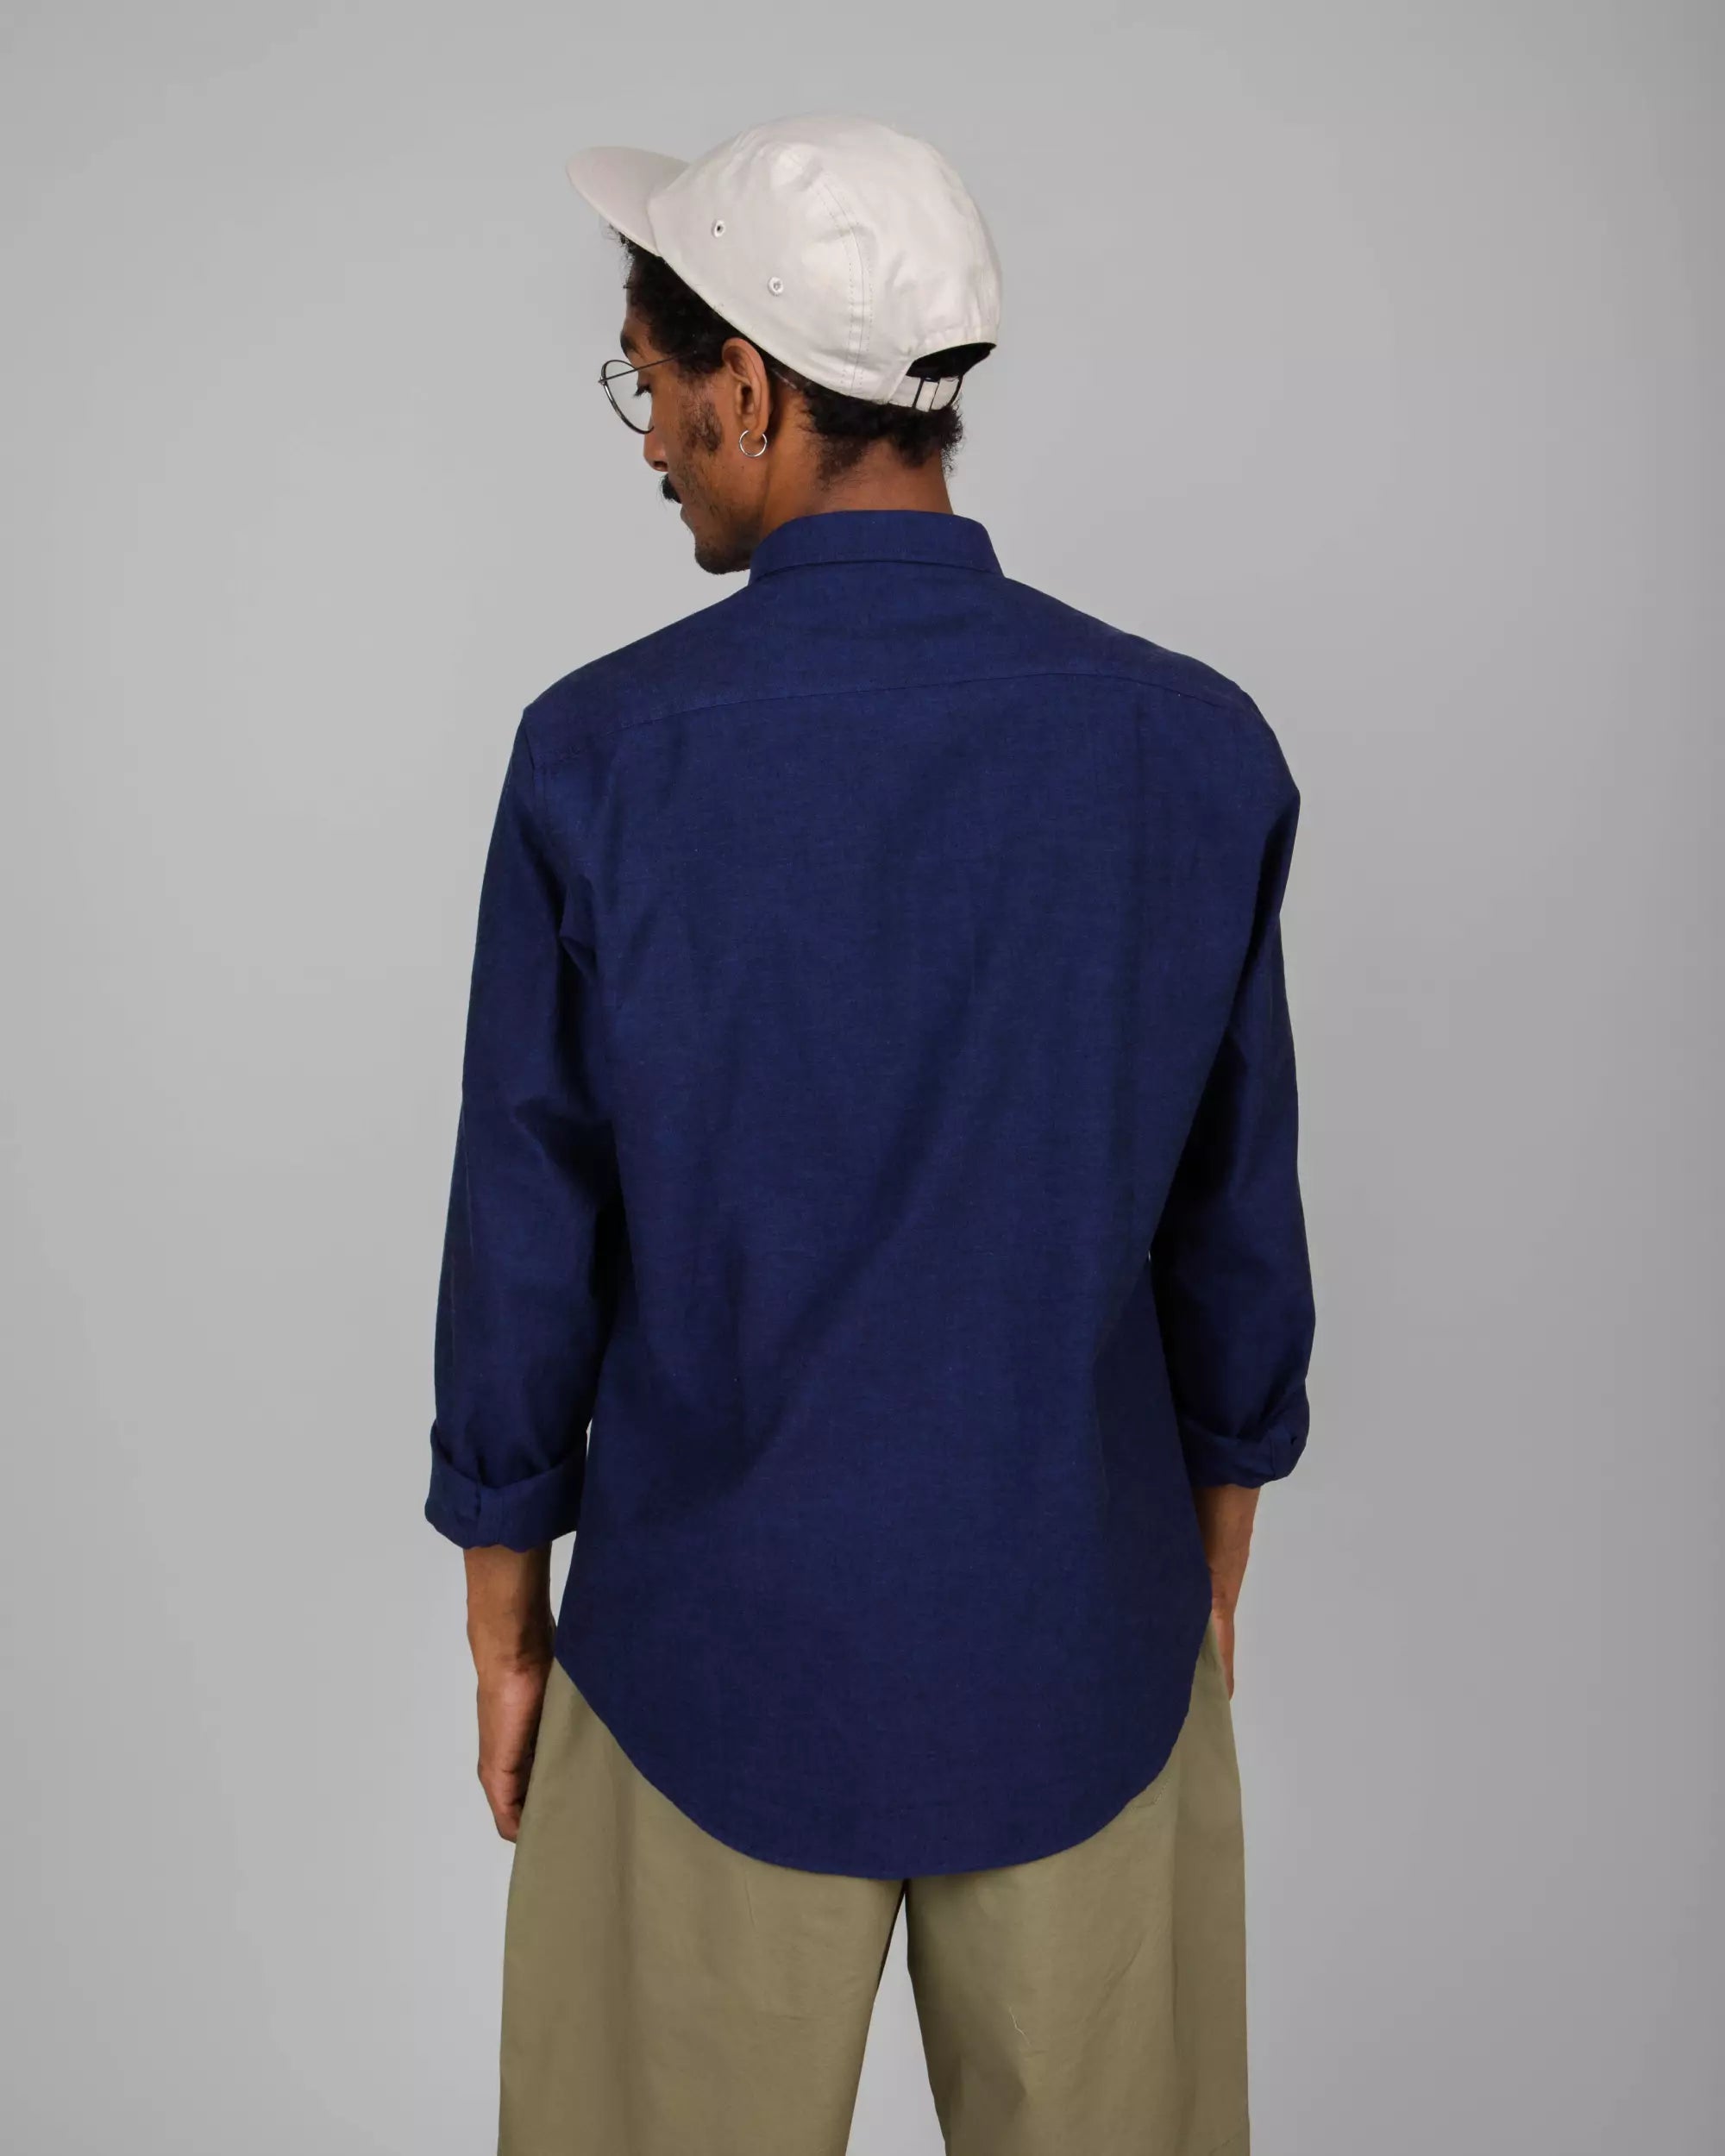 Dark blue, long-sleeved Oxford shirt made from 100% organic cotton from Brava Fabrics